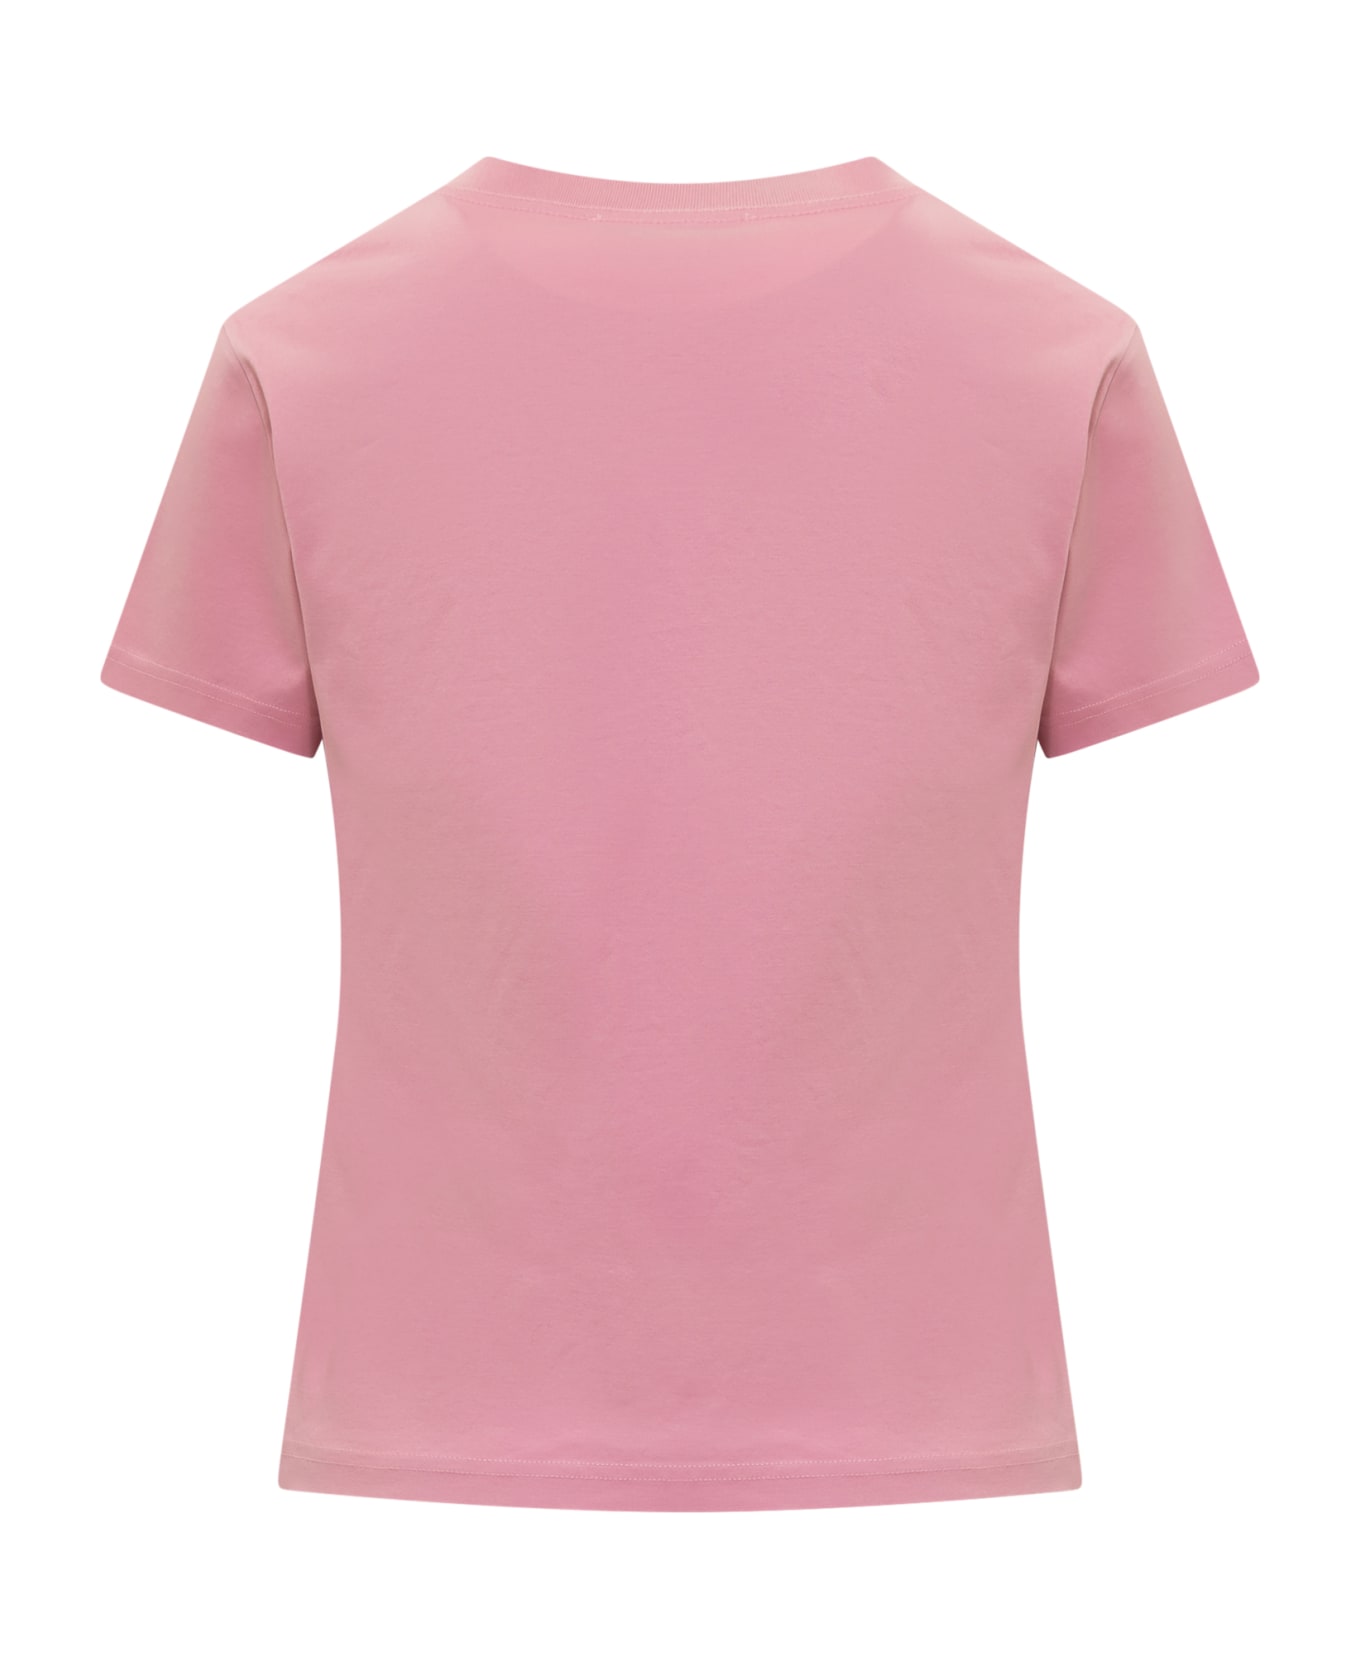 Lanvin Curb T-shirt - Peony Pink